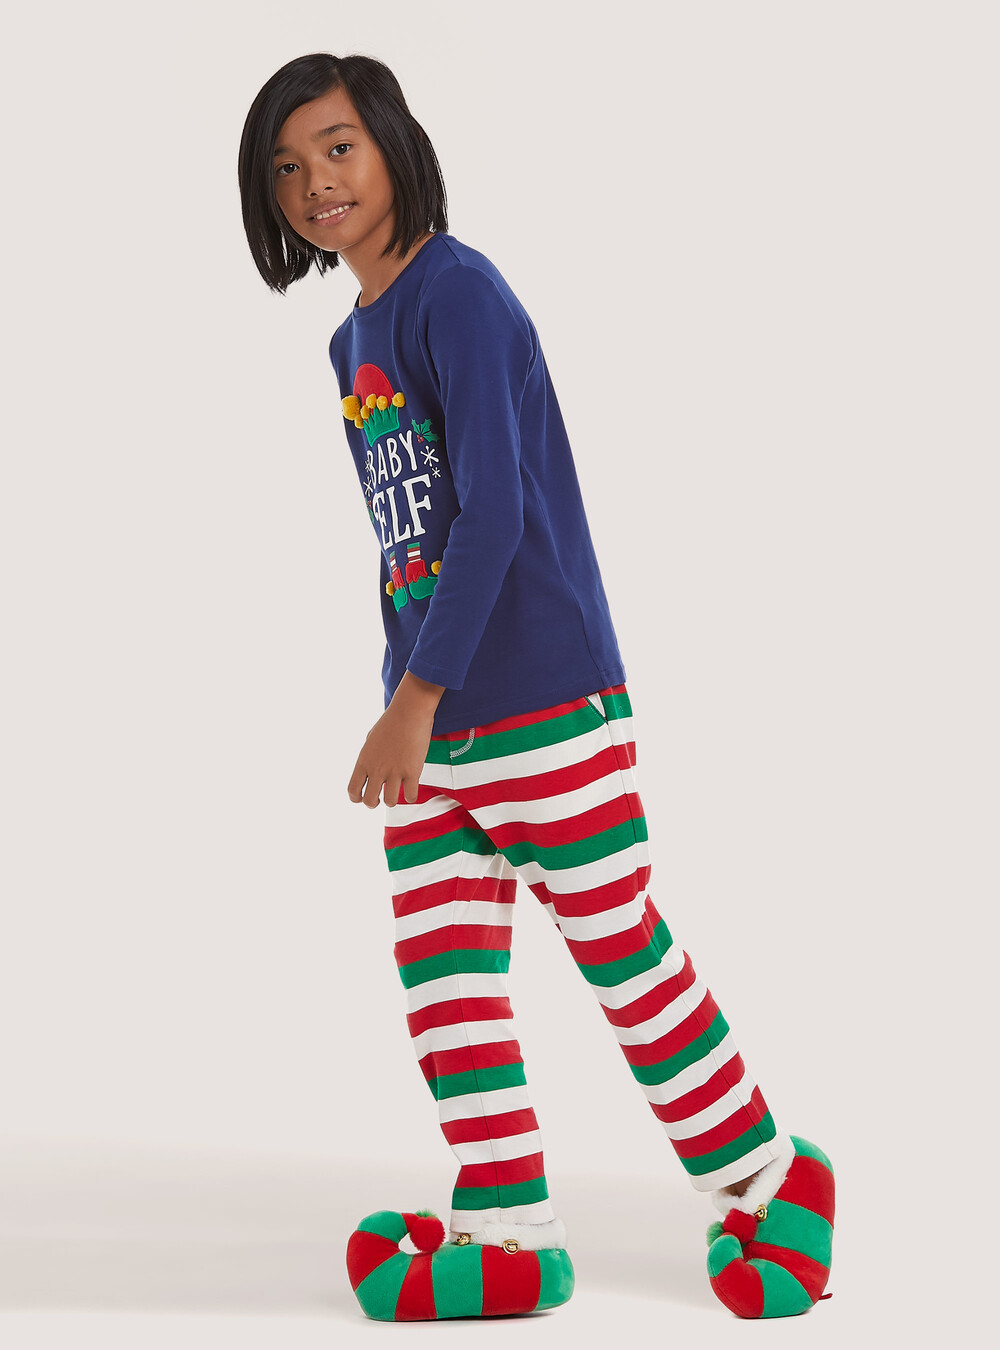 Pijama Elfo Familiar Navidad | Alcott | Uomo